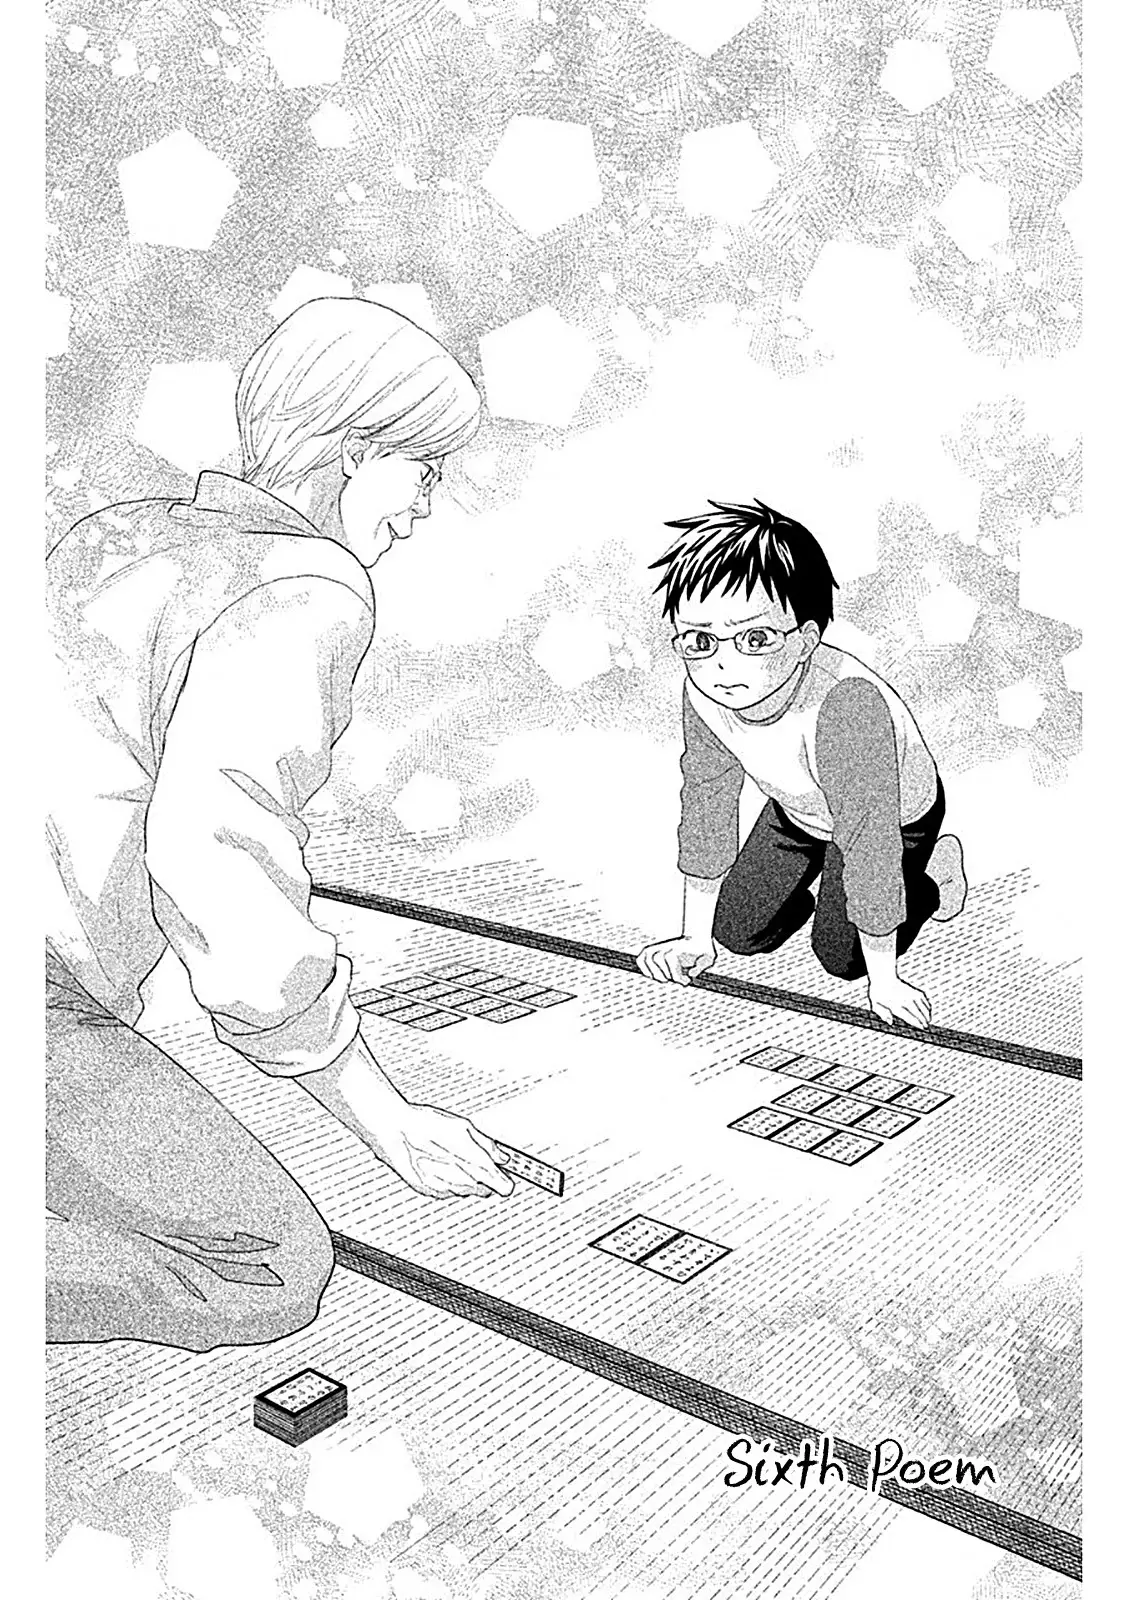 Chihayafuru: Middle School Arc - 6 page 2